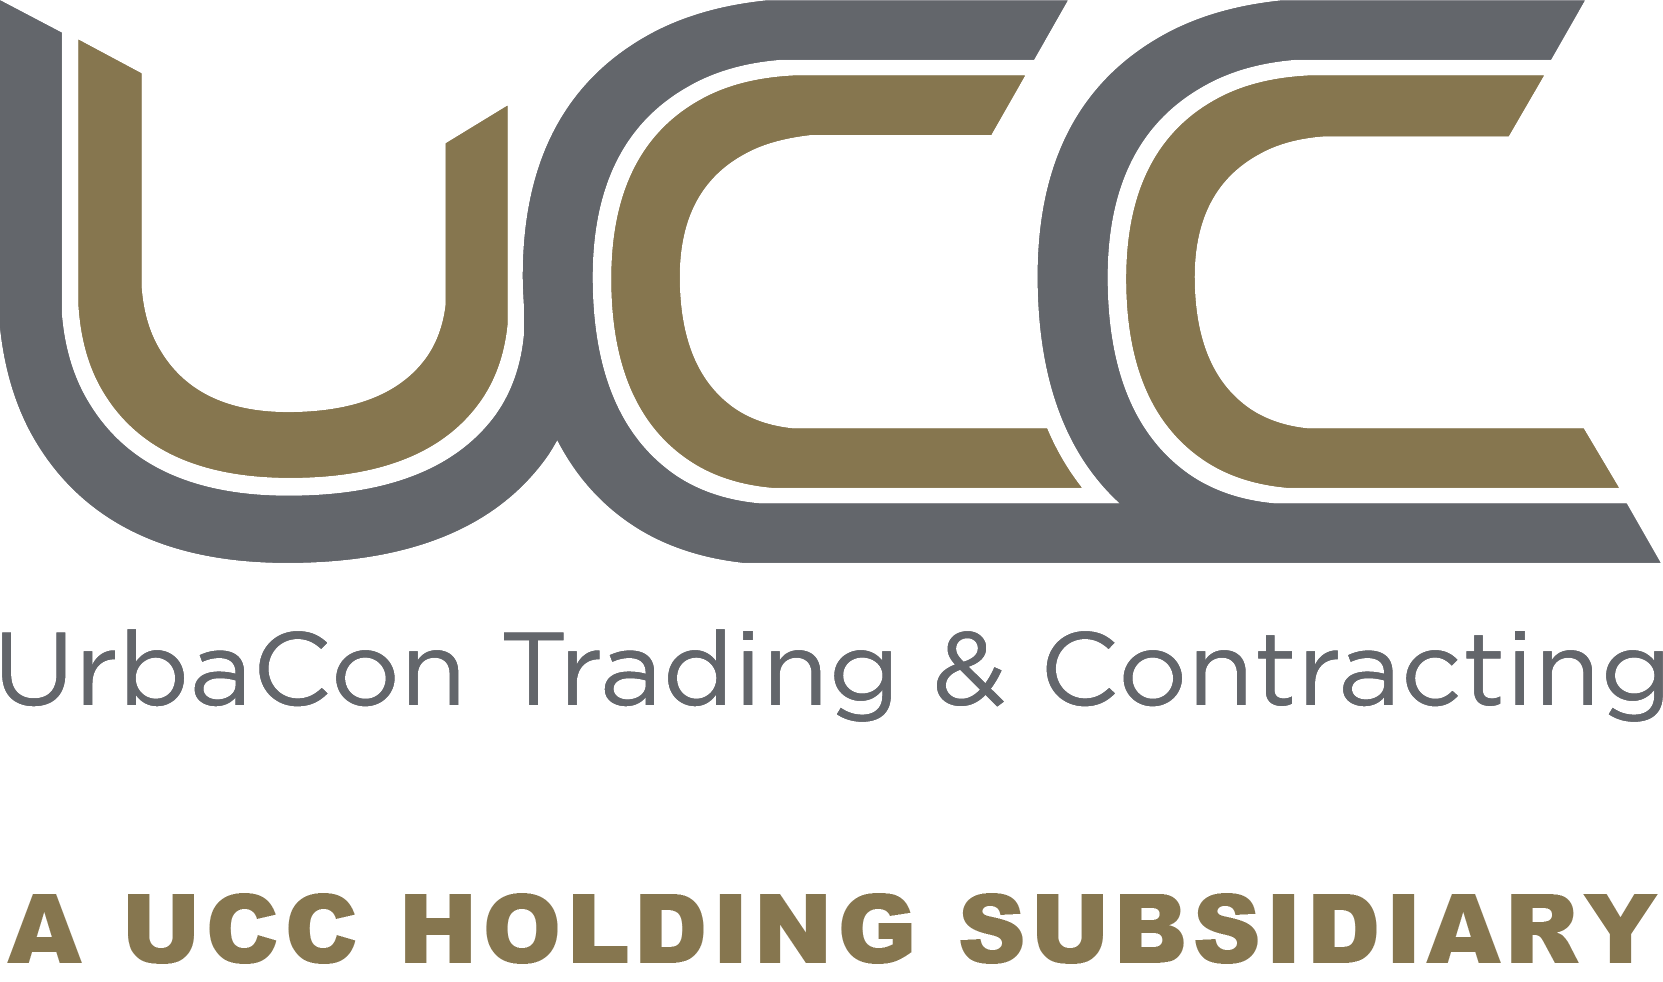 UrbaCon Trading & Contracting - UCC